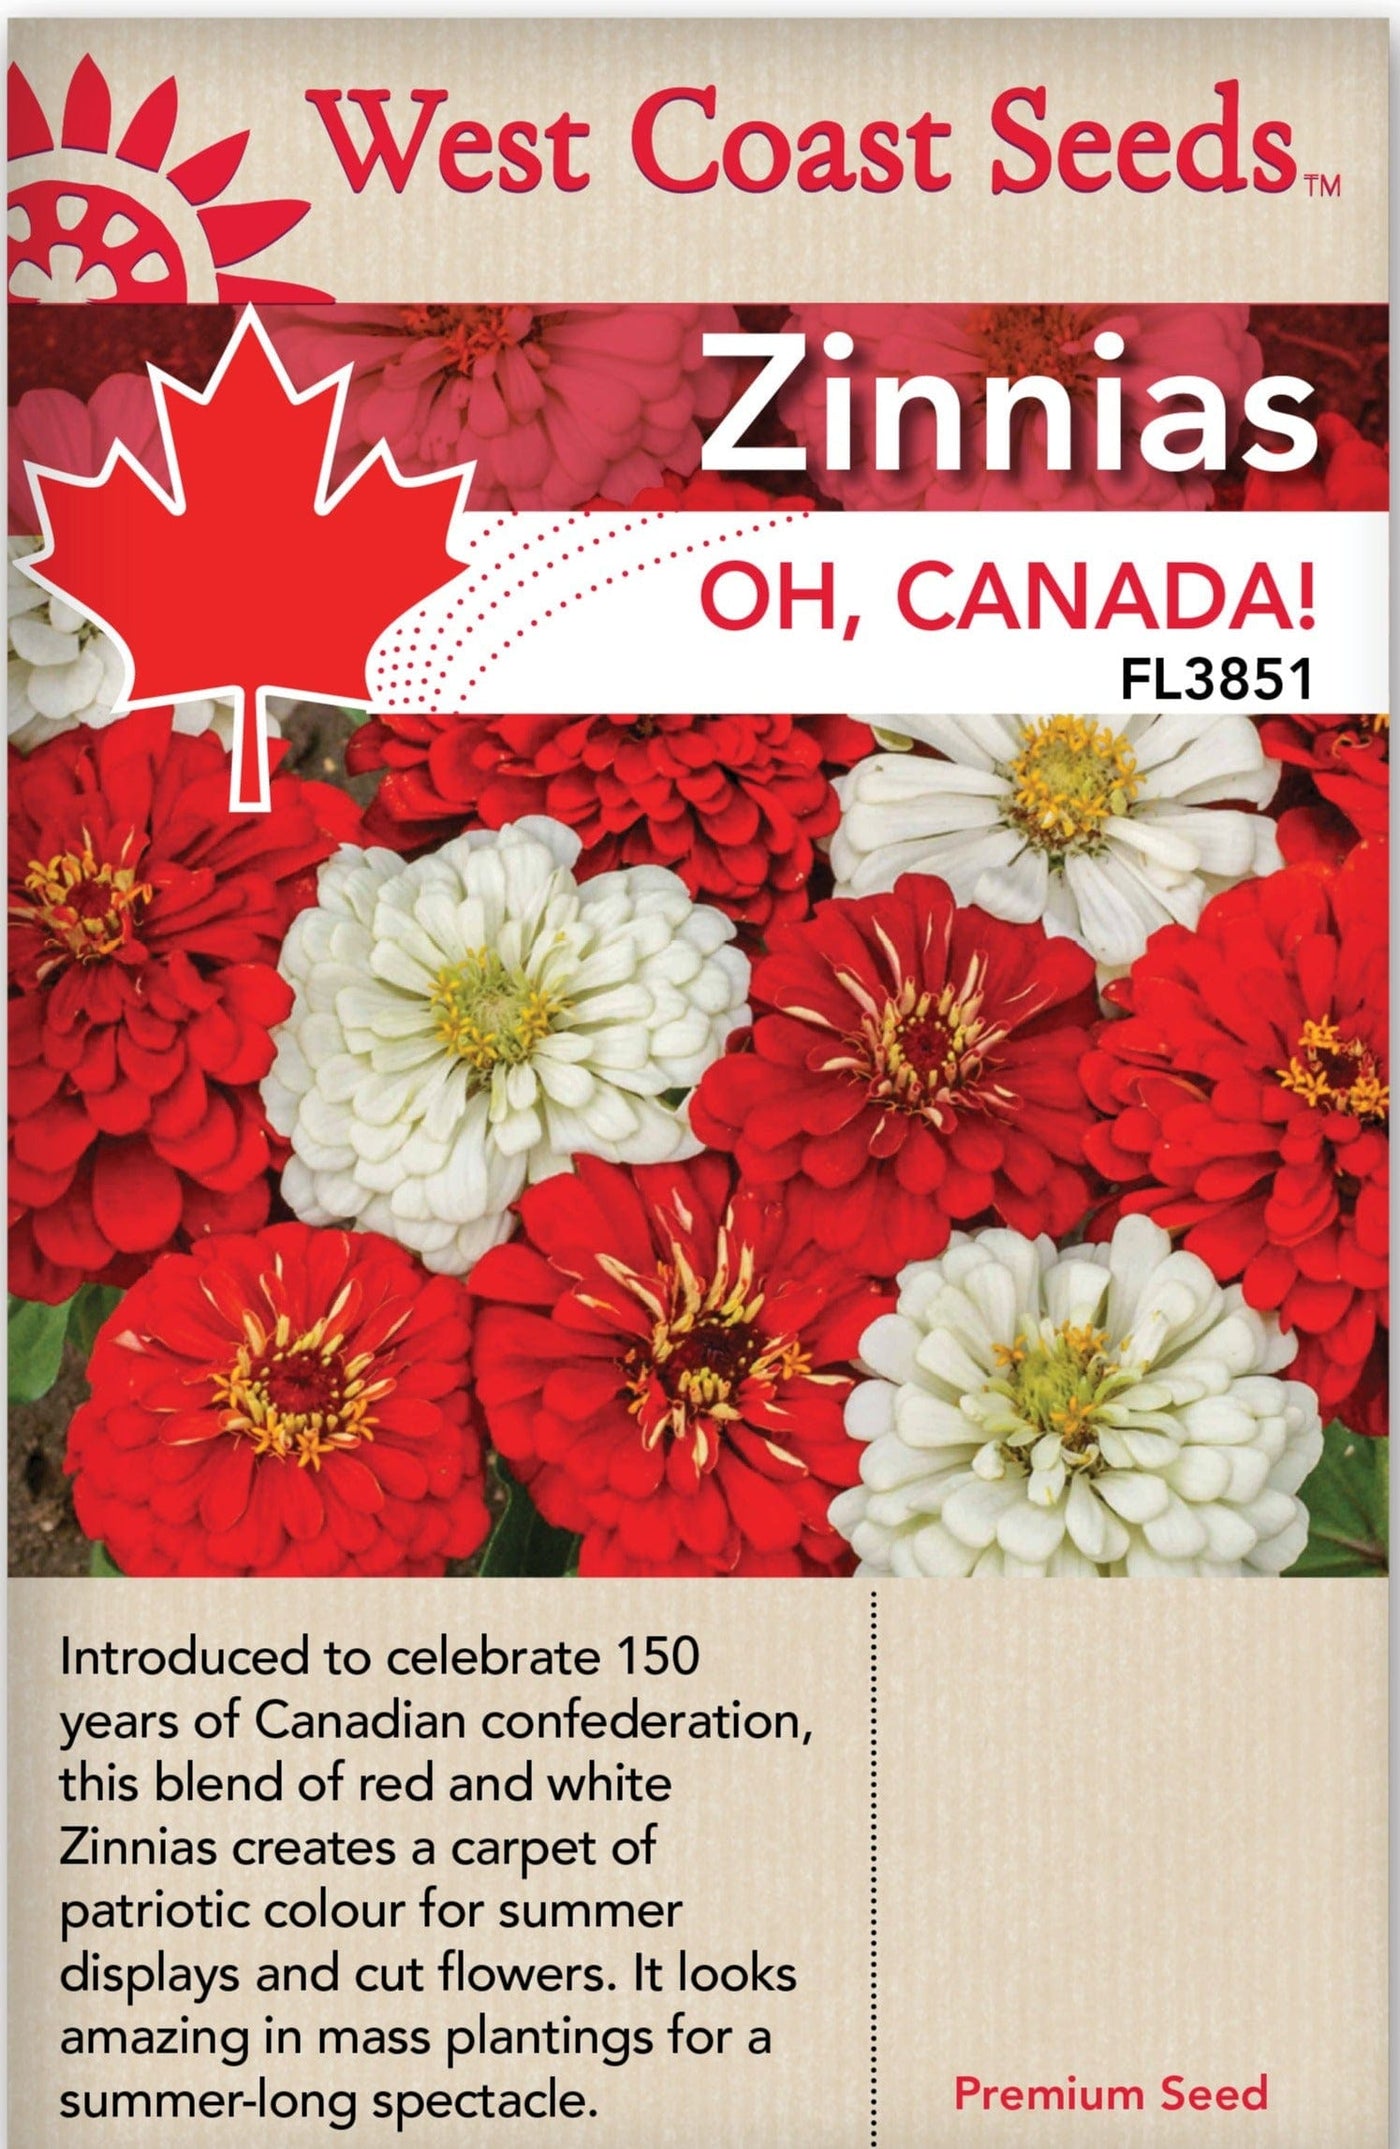 Zinnias Oh Canada! - West Coast Seeds West Coast Seeds Ltd